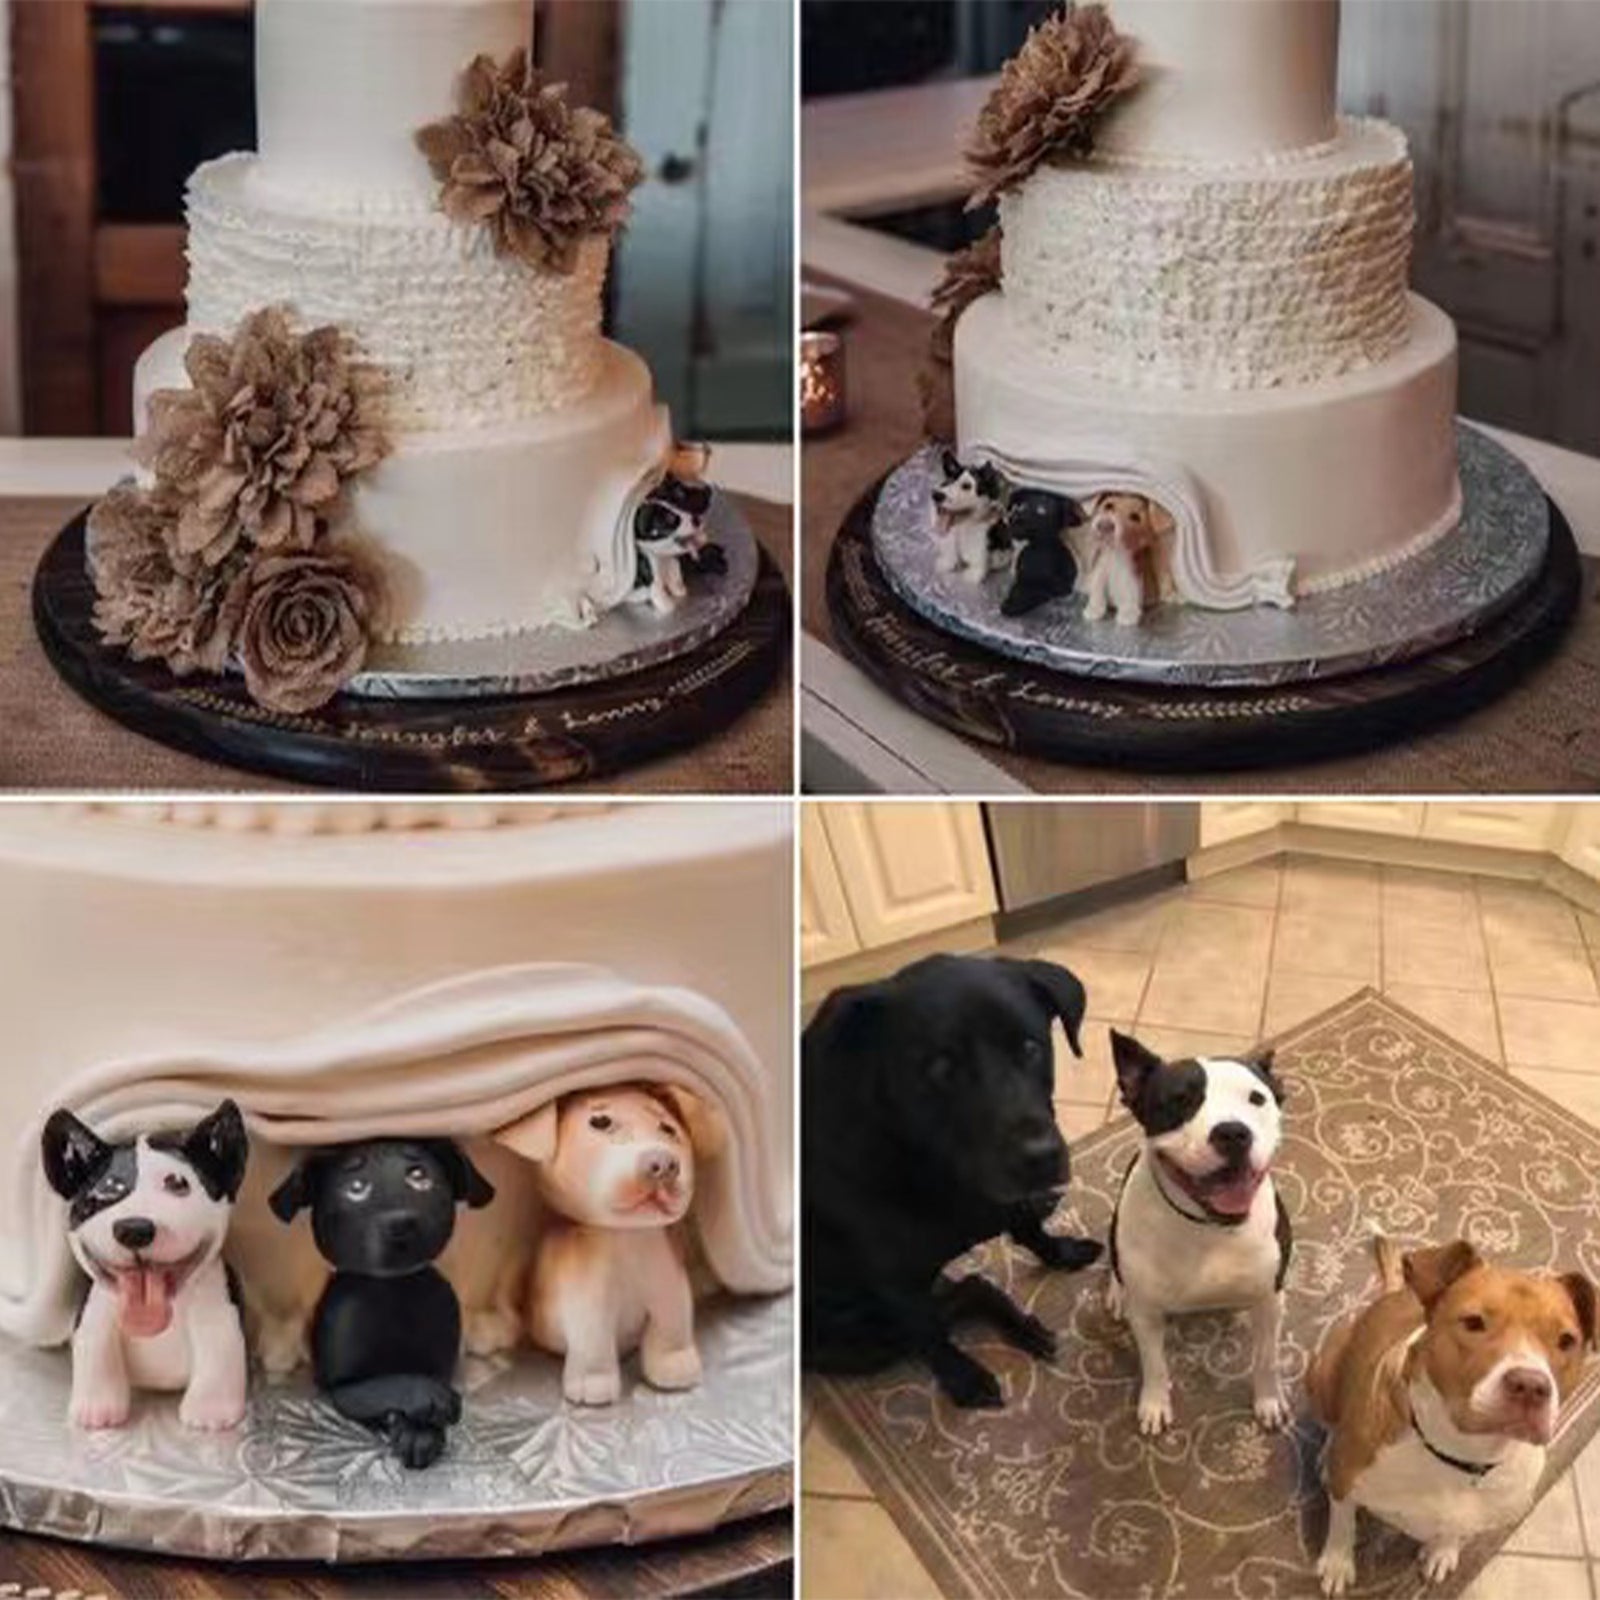 Why should I buy a custom dog figurine for my wedding cake?